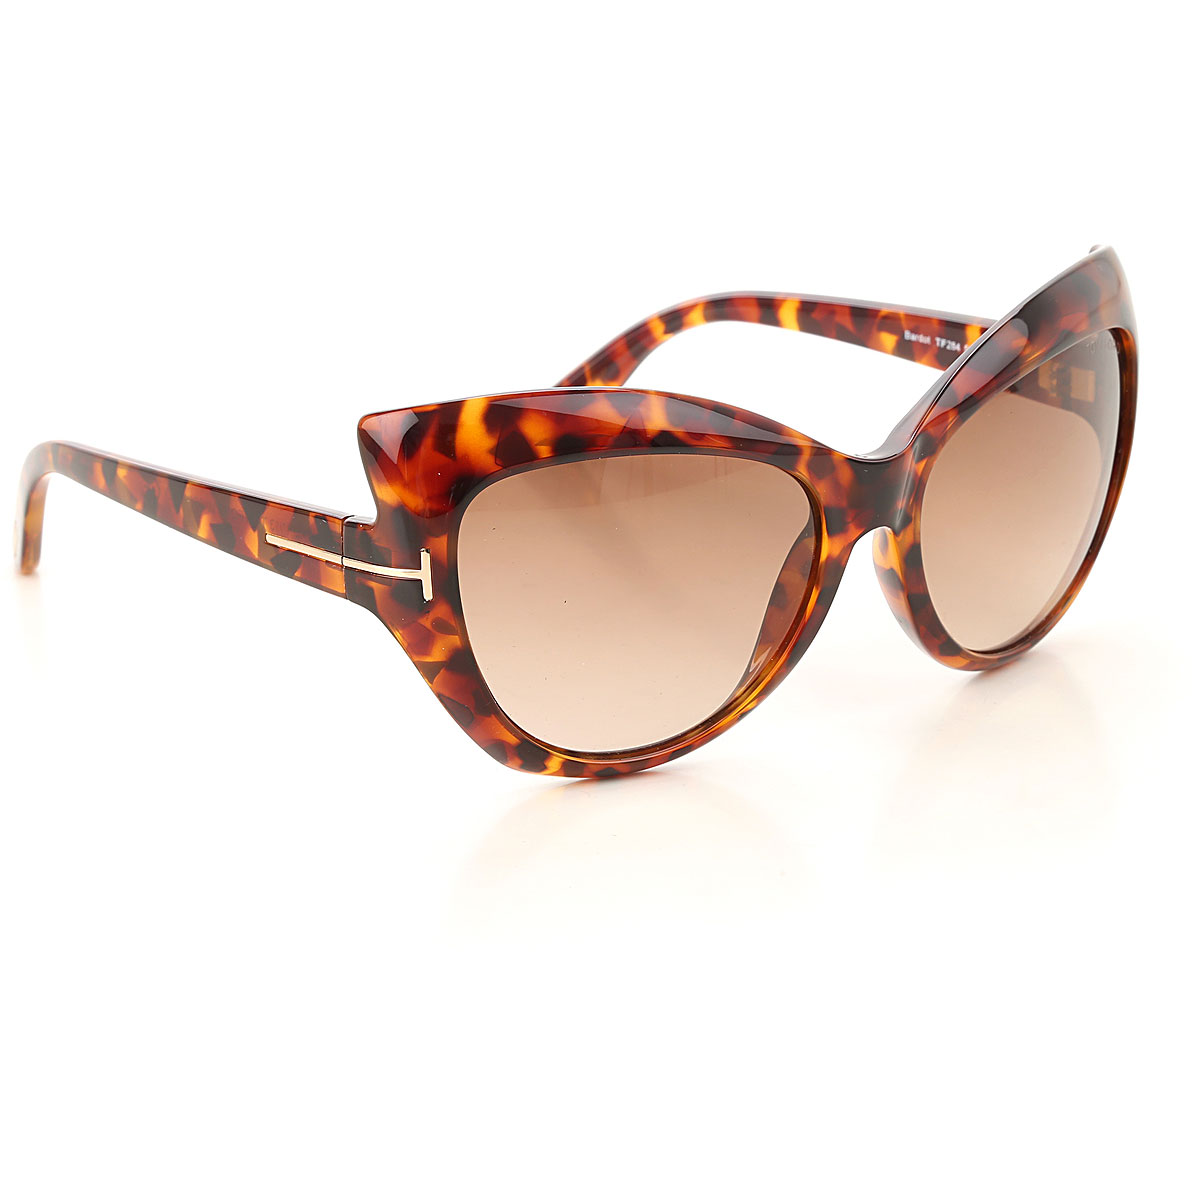 Sunglasses Tom Ford, Style code: bardot-tf284-52f